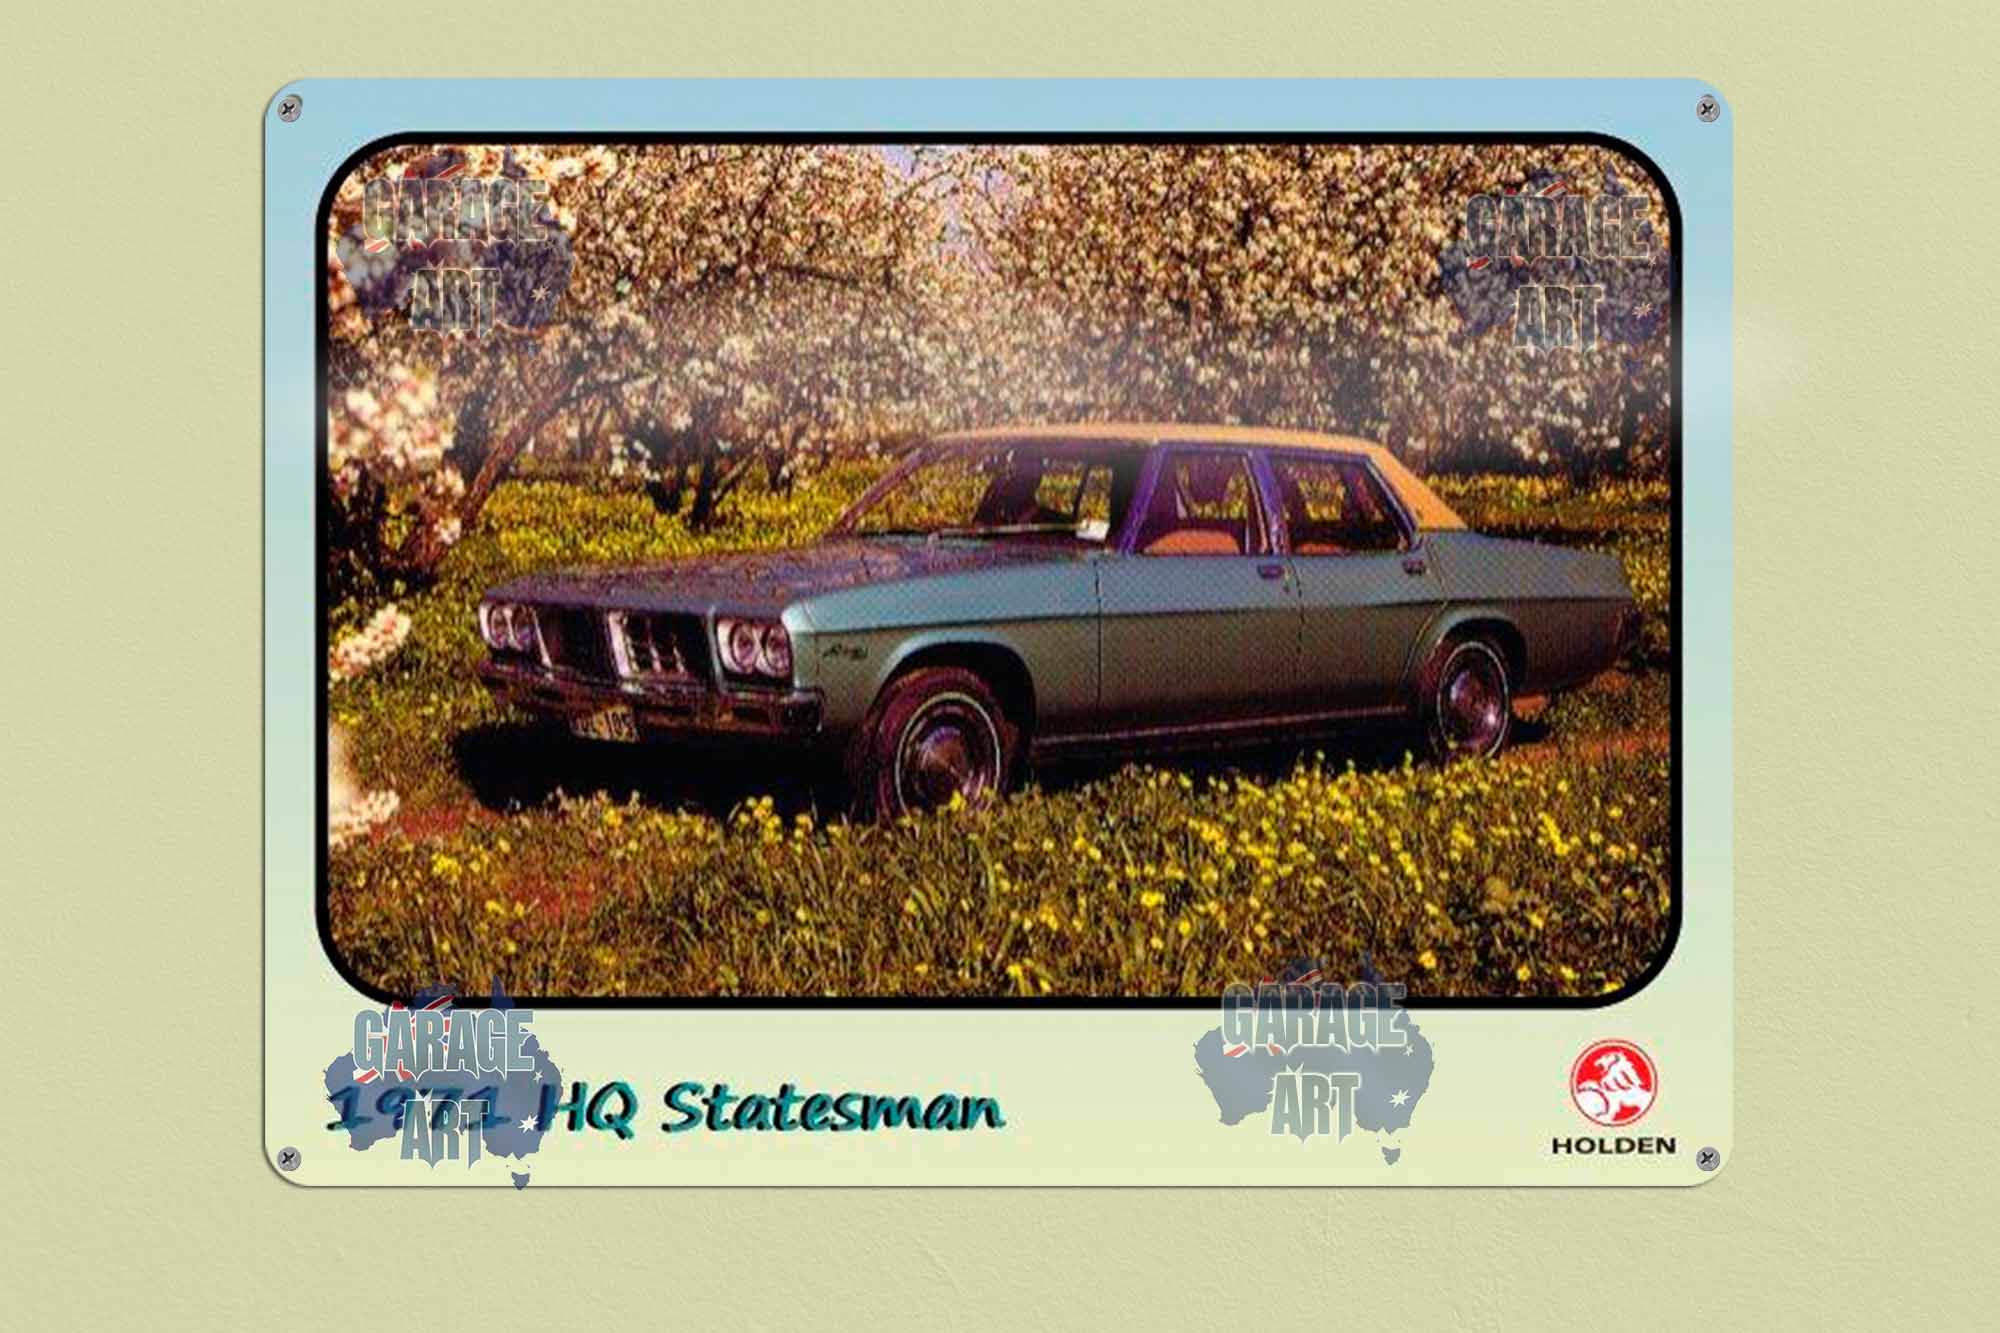 1971 HQ Statesman Tin Sign freeshipping - garageartaustralia